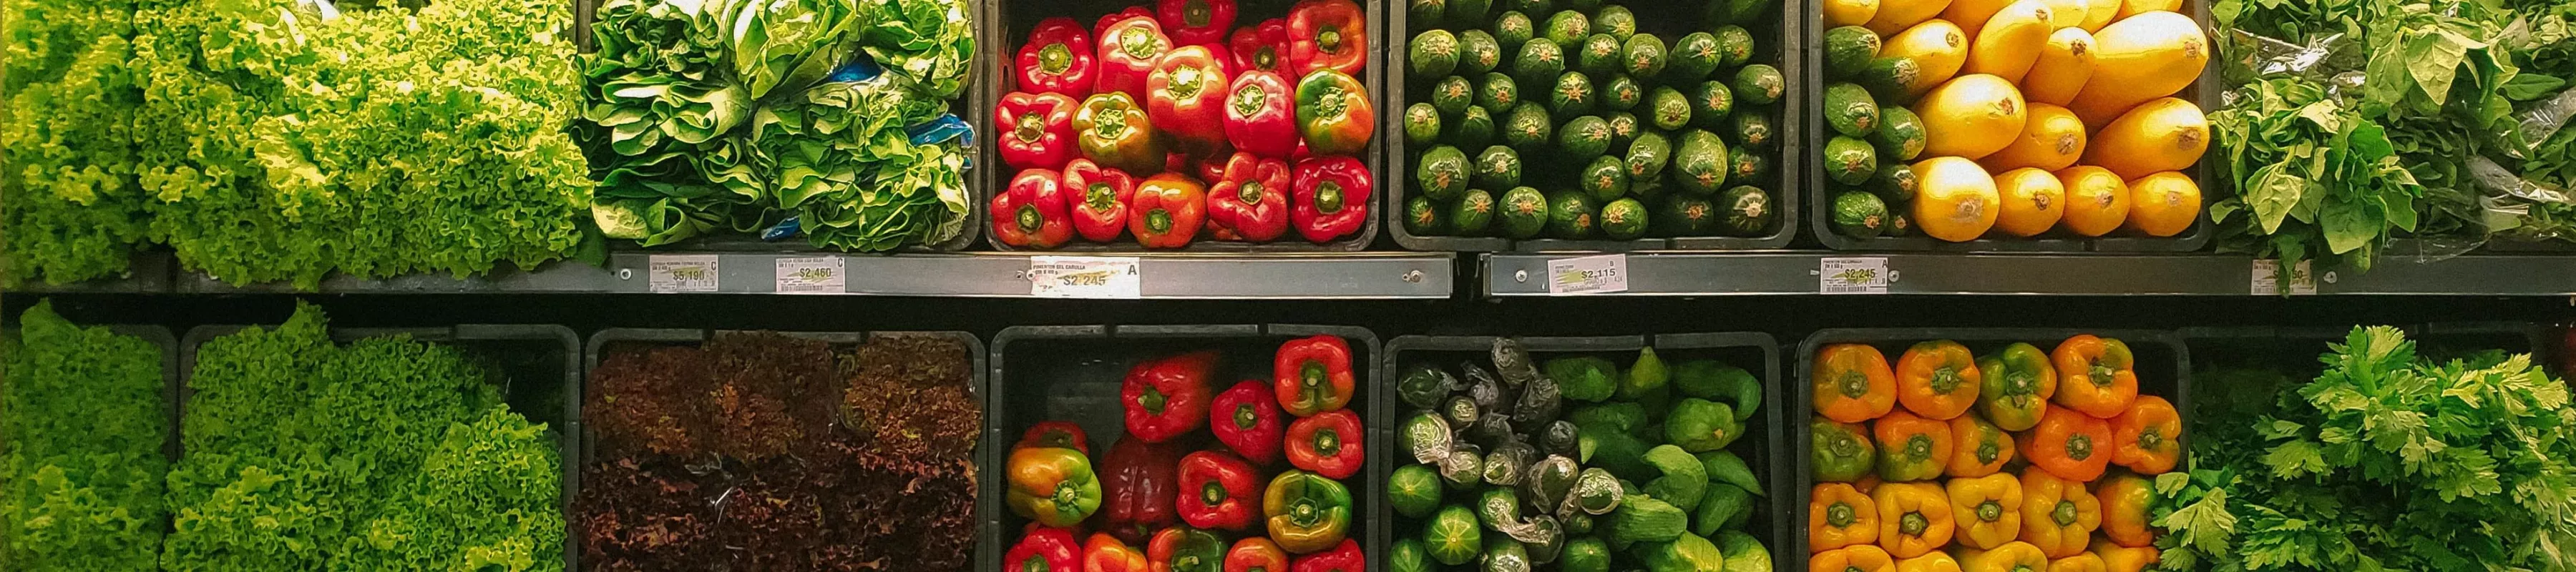 Rows of vegetables on supermarket shelves